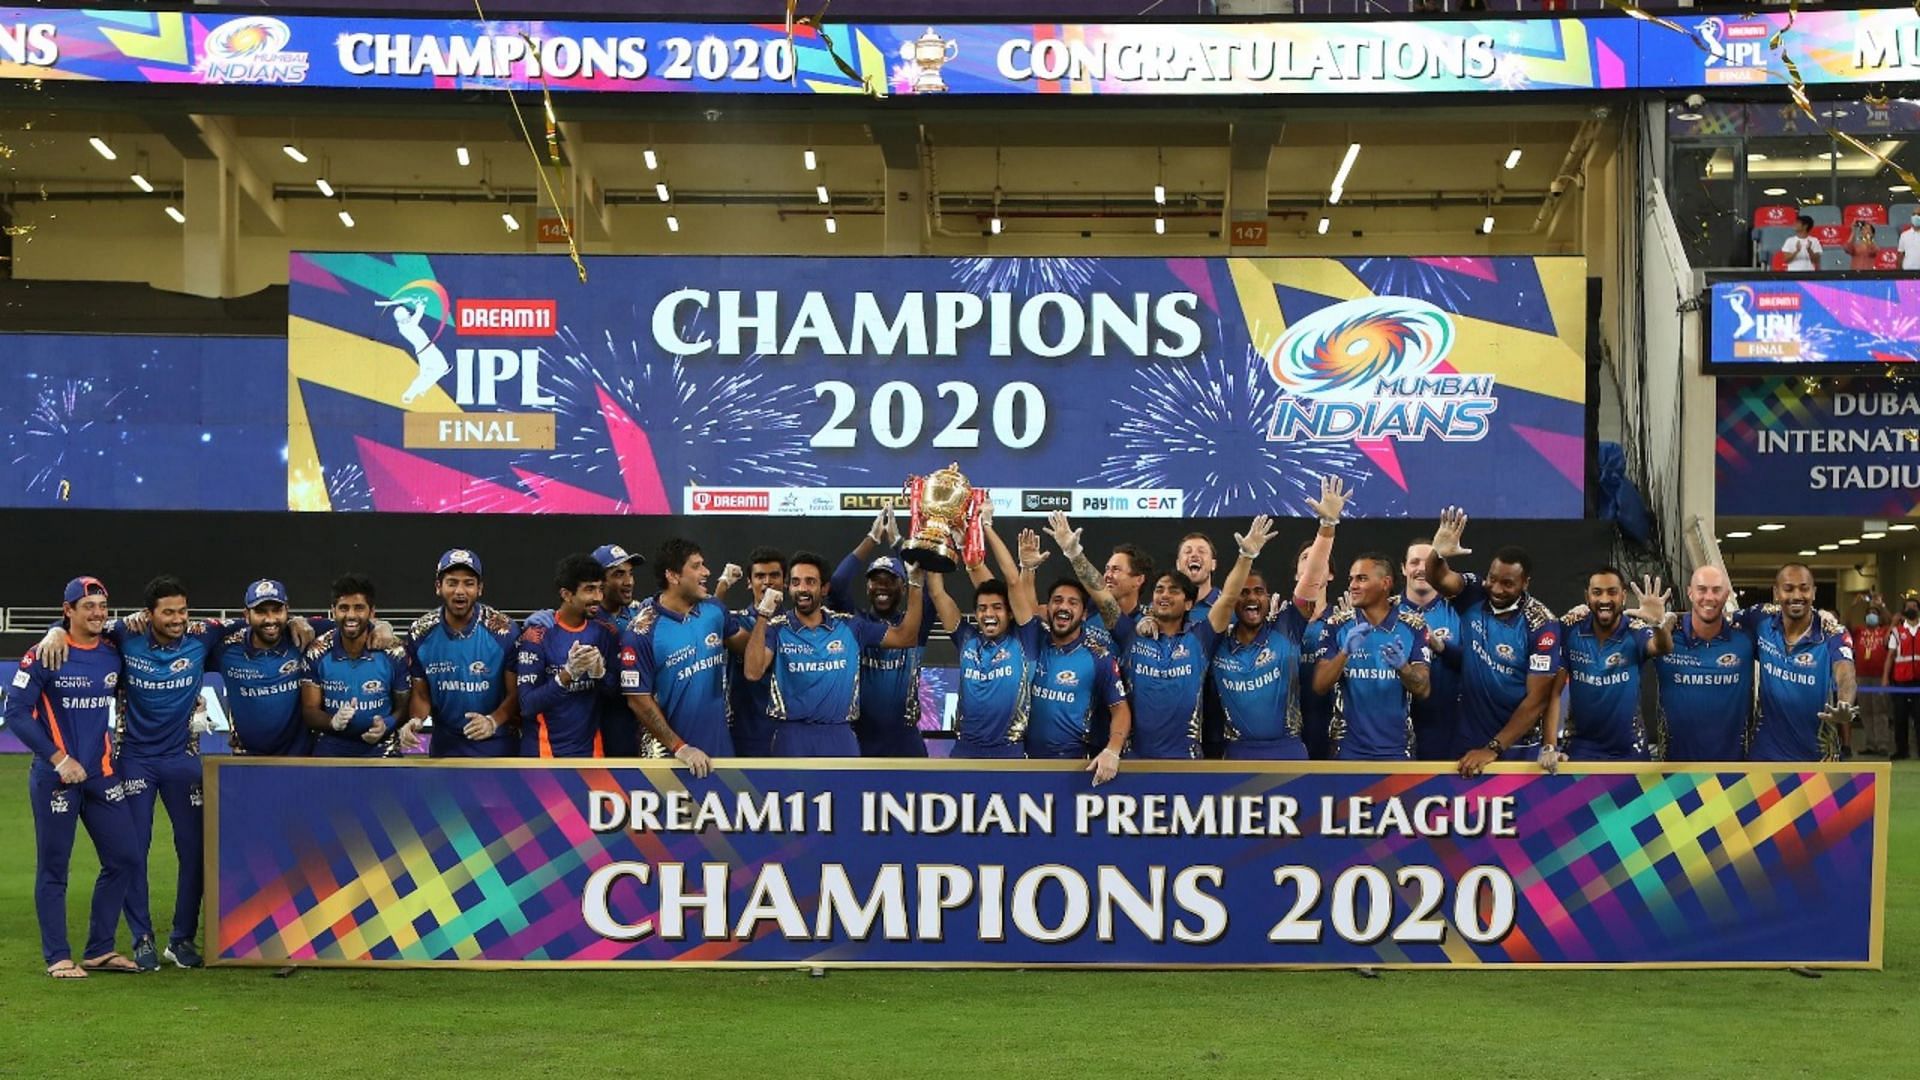 Mumbai Indians - IPL 2020 Champions